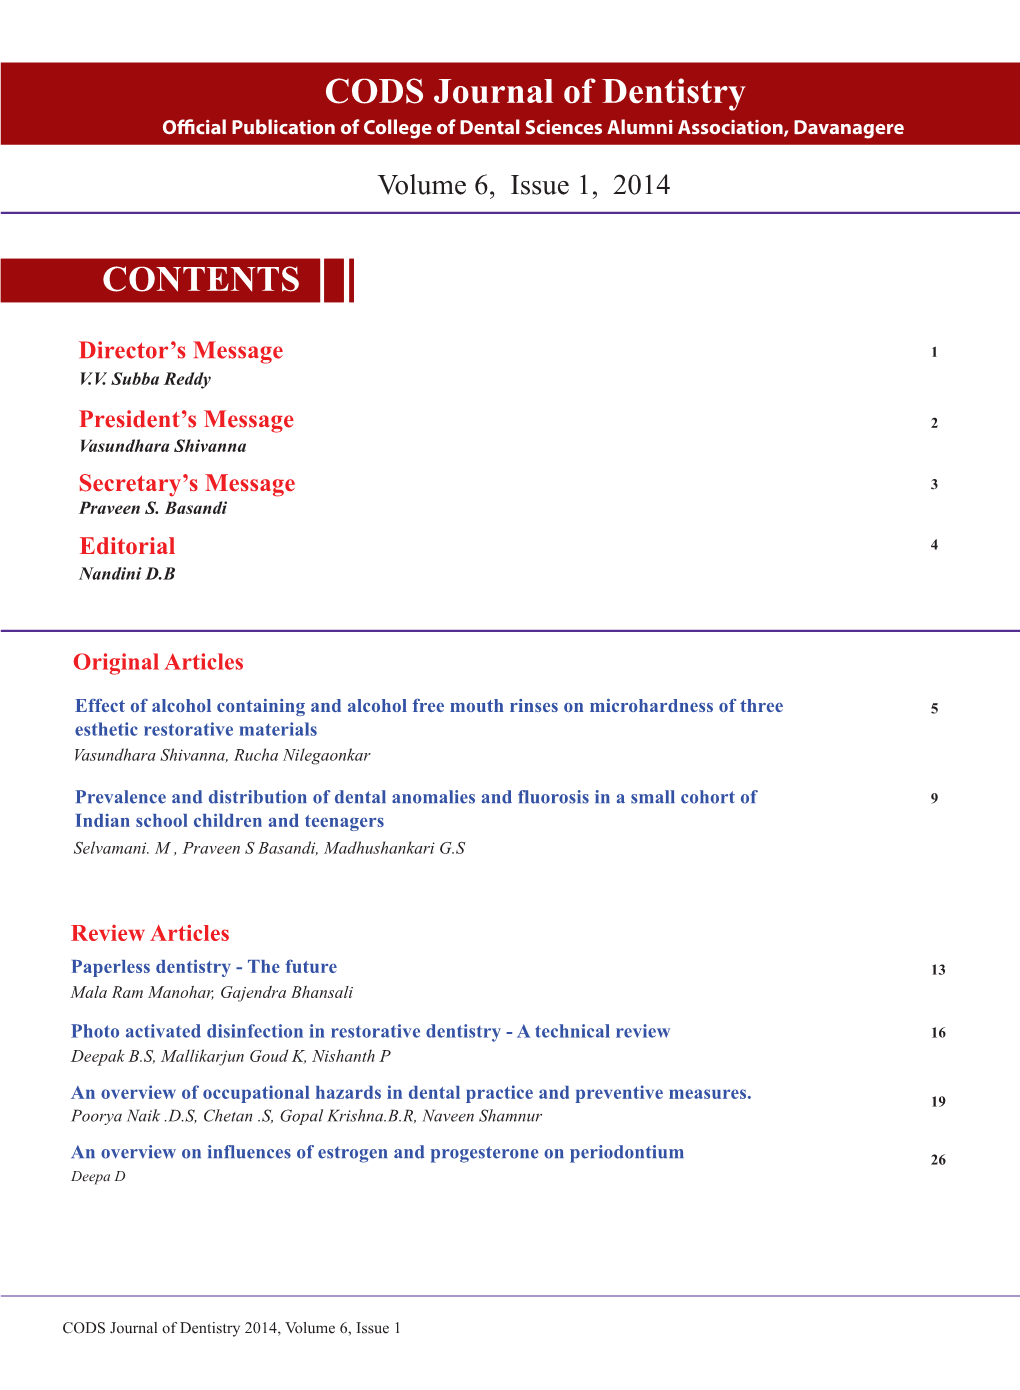 Variants of Inferior Alveolar Nerve Block: a Review 35 Anuradha M, Yashavanth Kumar D.S, Harsha .V